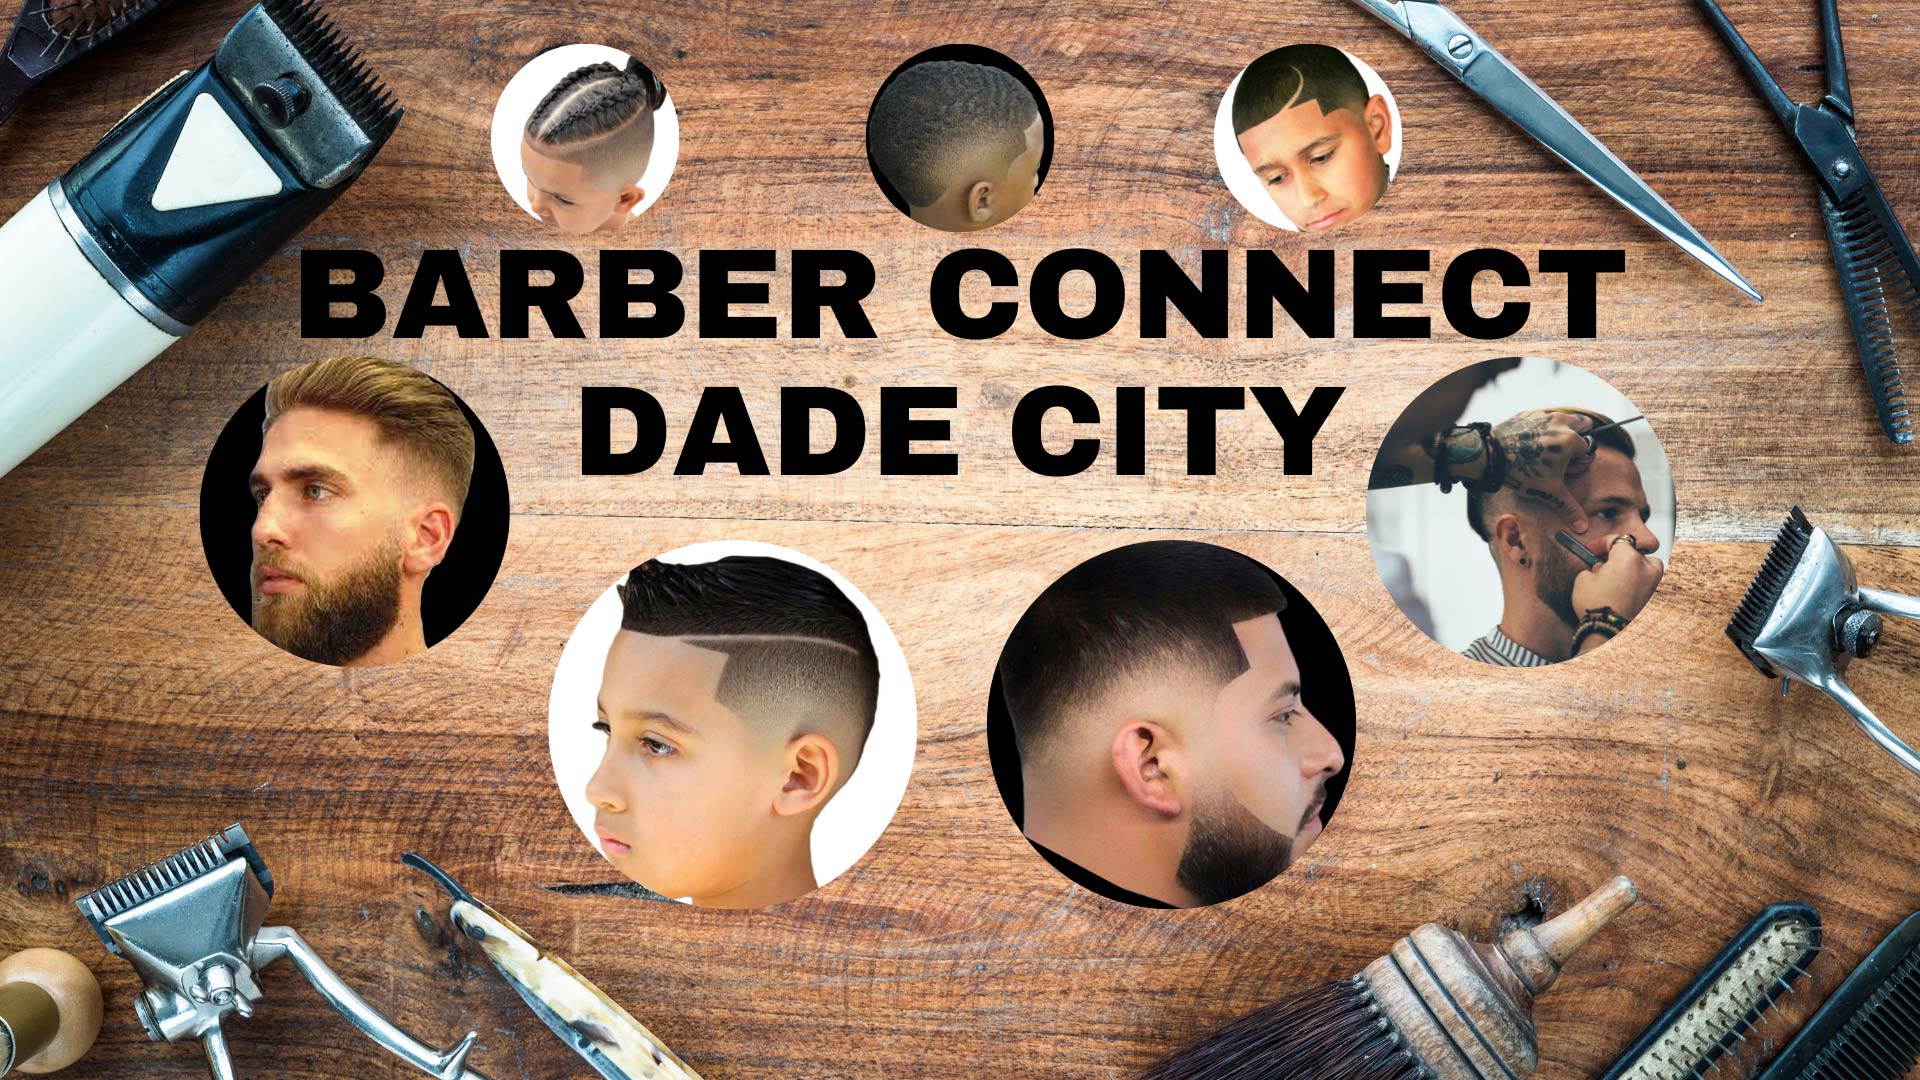 barber-connect-dade-city header,